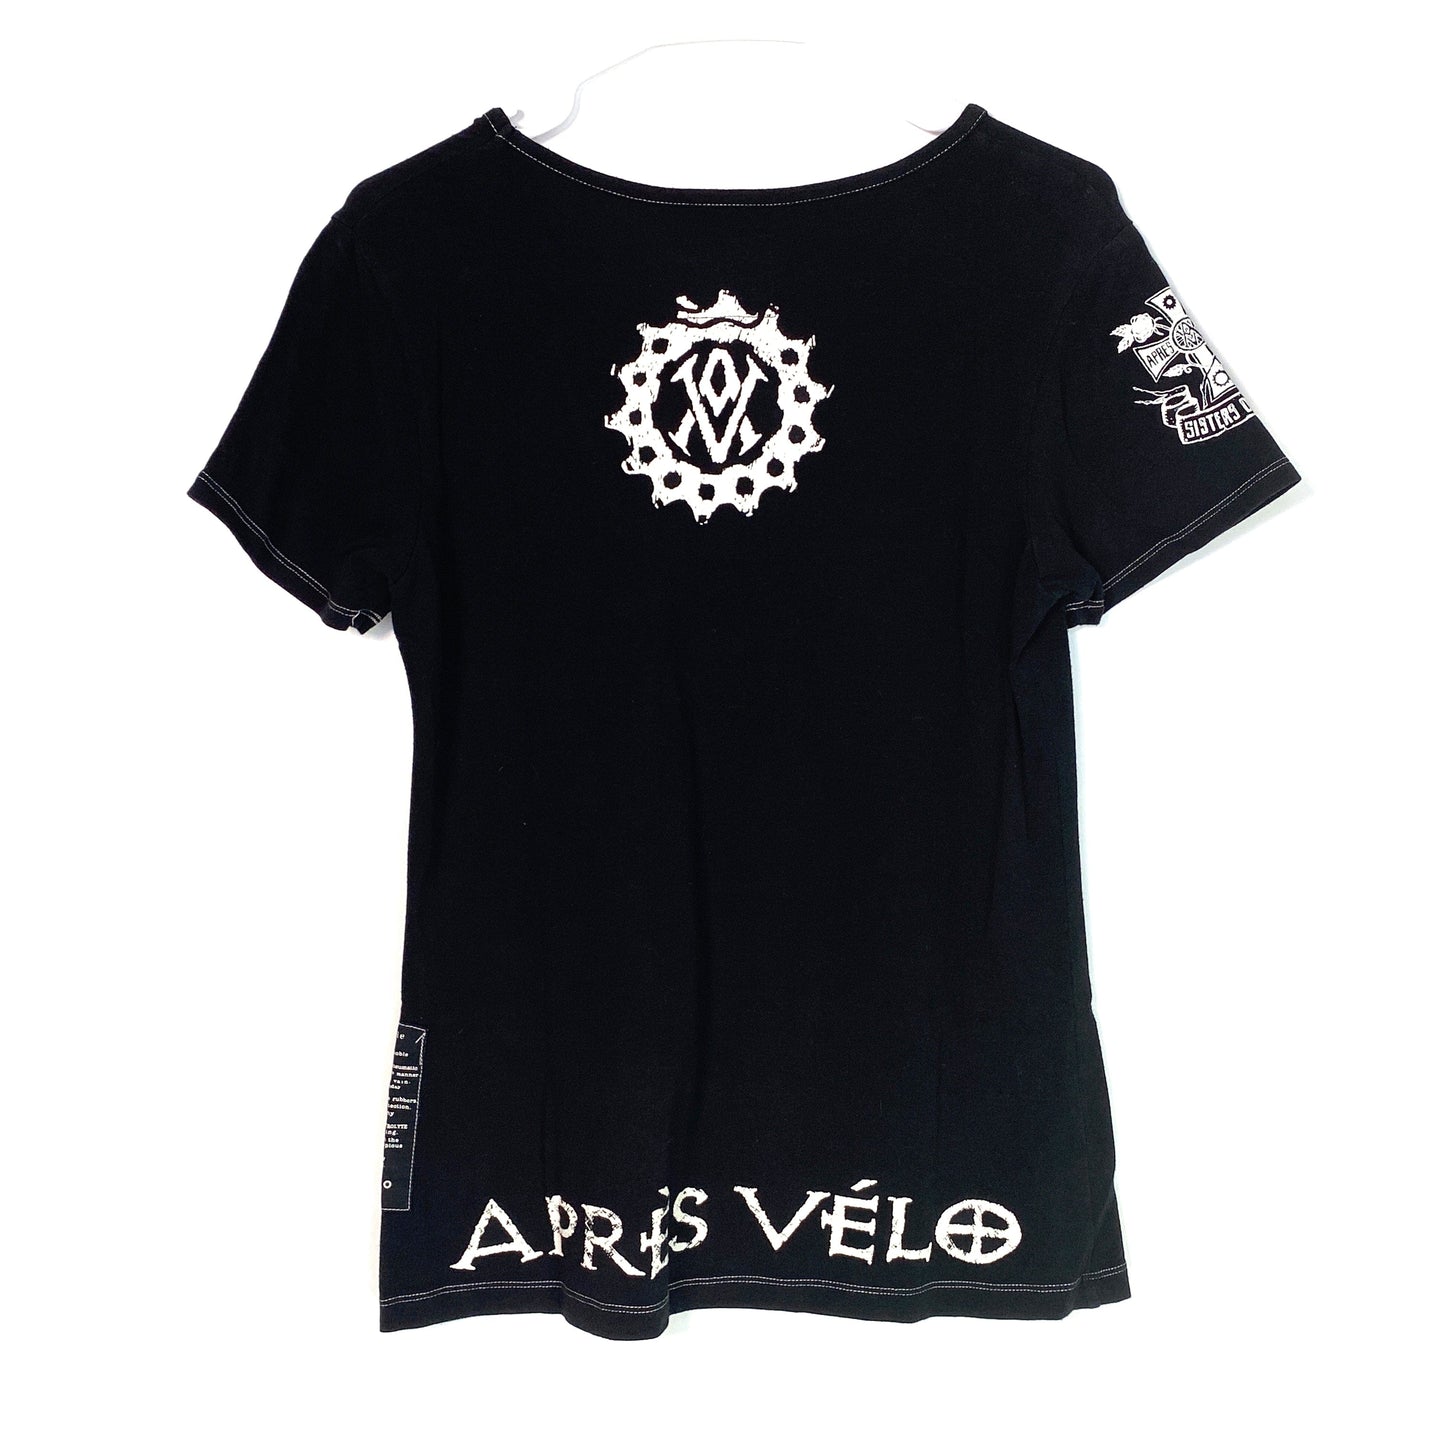 Apres Velo Womens Size L Black T-Shirt V Neck S/s